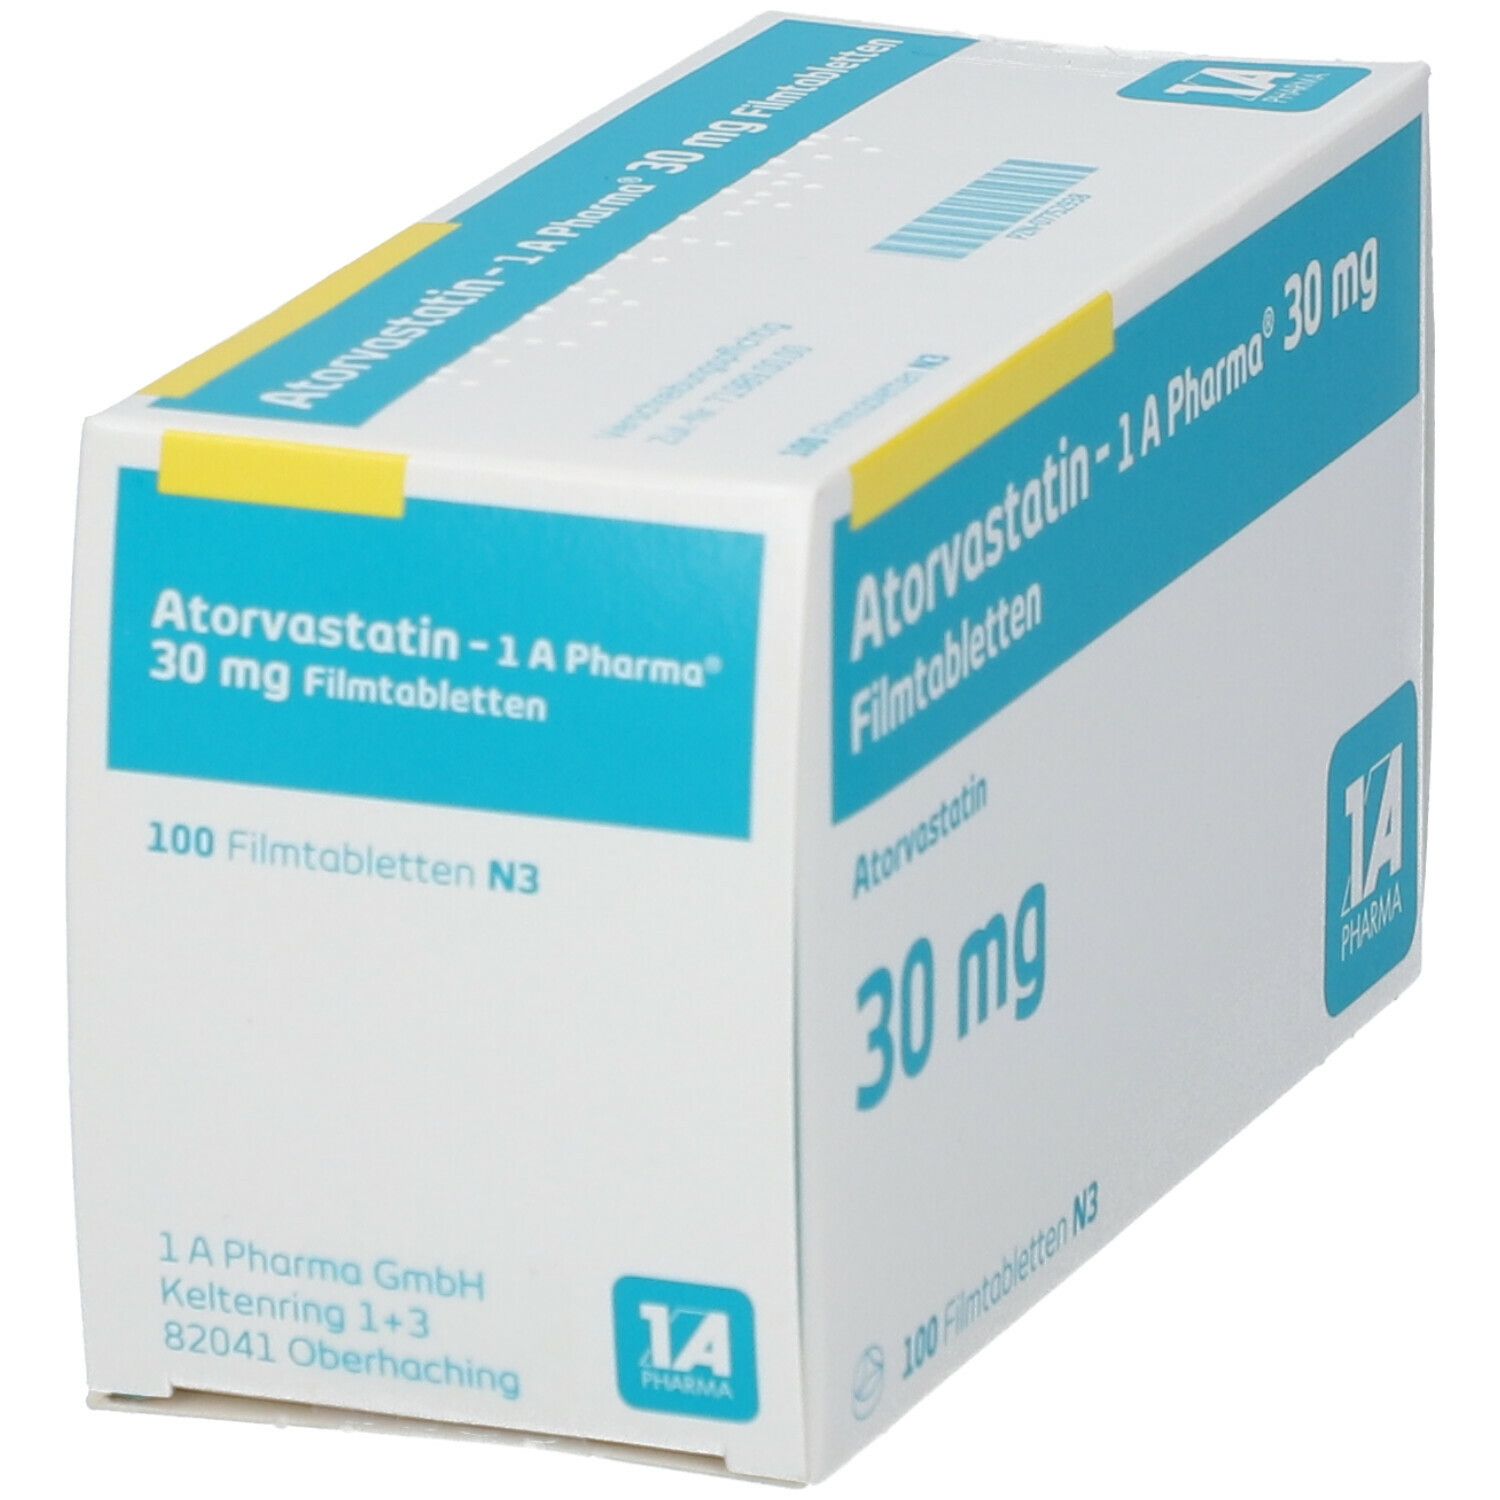 Atorvastatin - 1 A Pharma® 30 mg